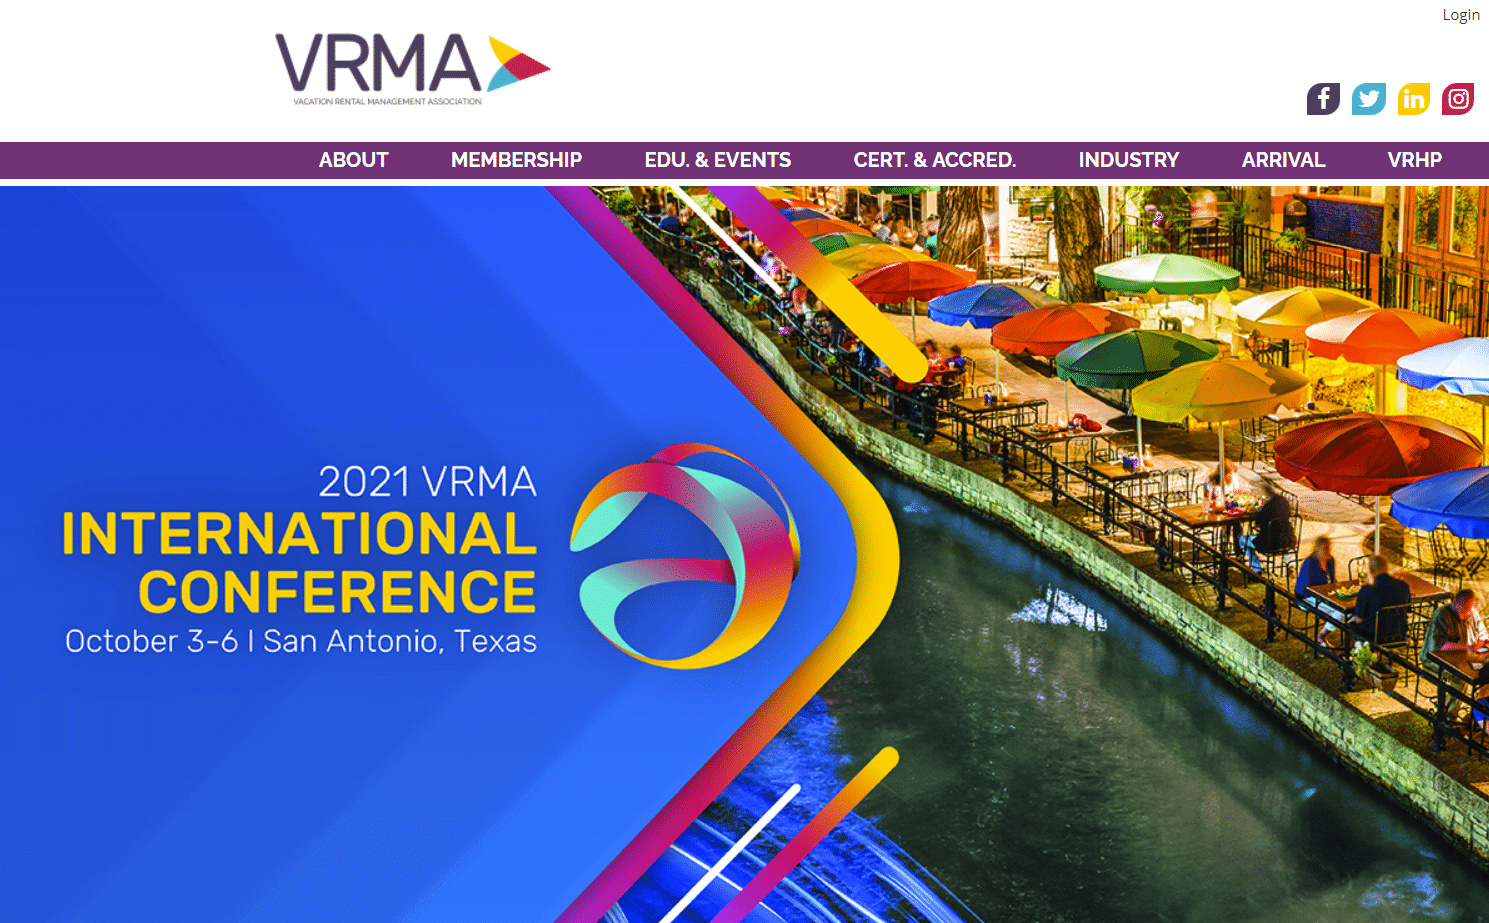 VRMA Adds RBOs to Membership via VRBO Partnership